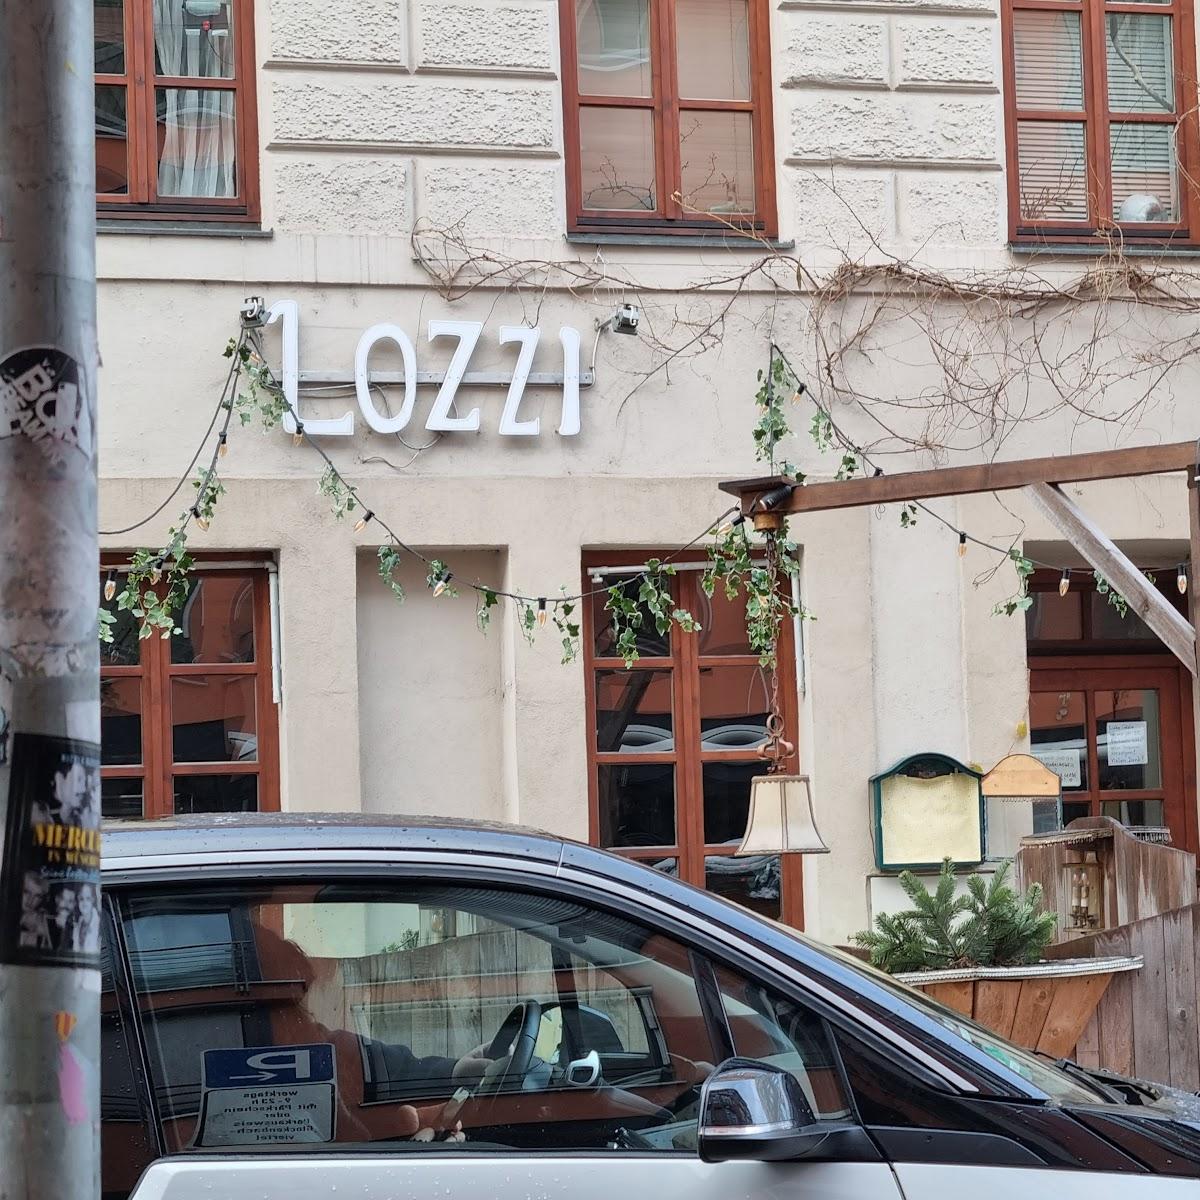 Restaurant "Cafe Lozzi" in München